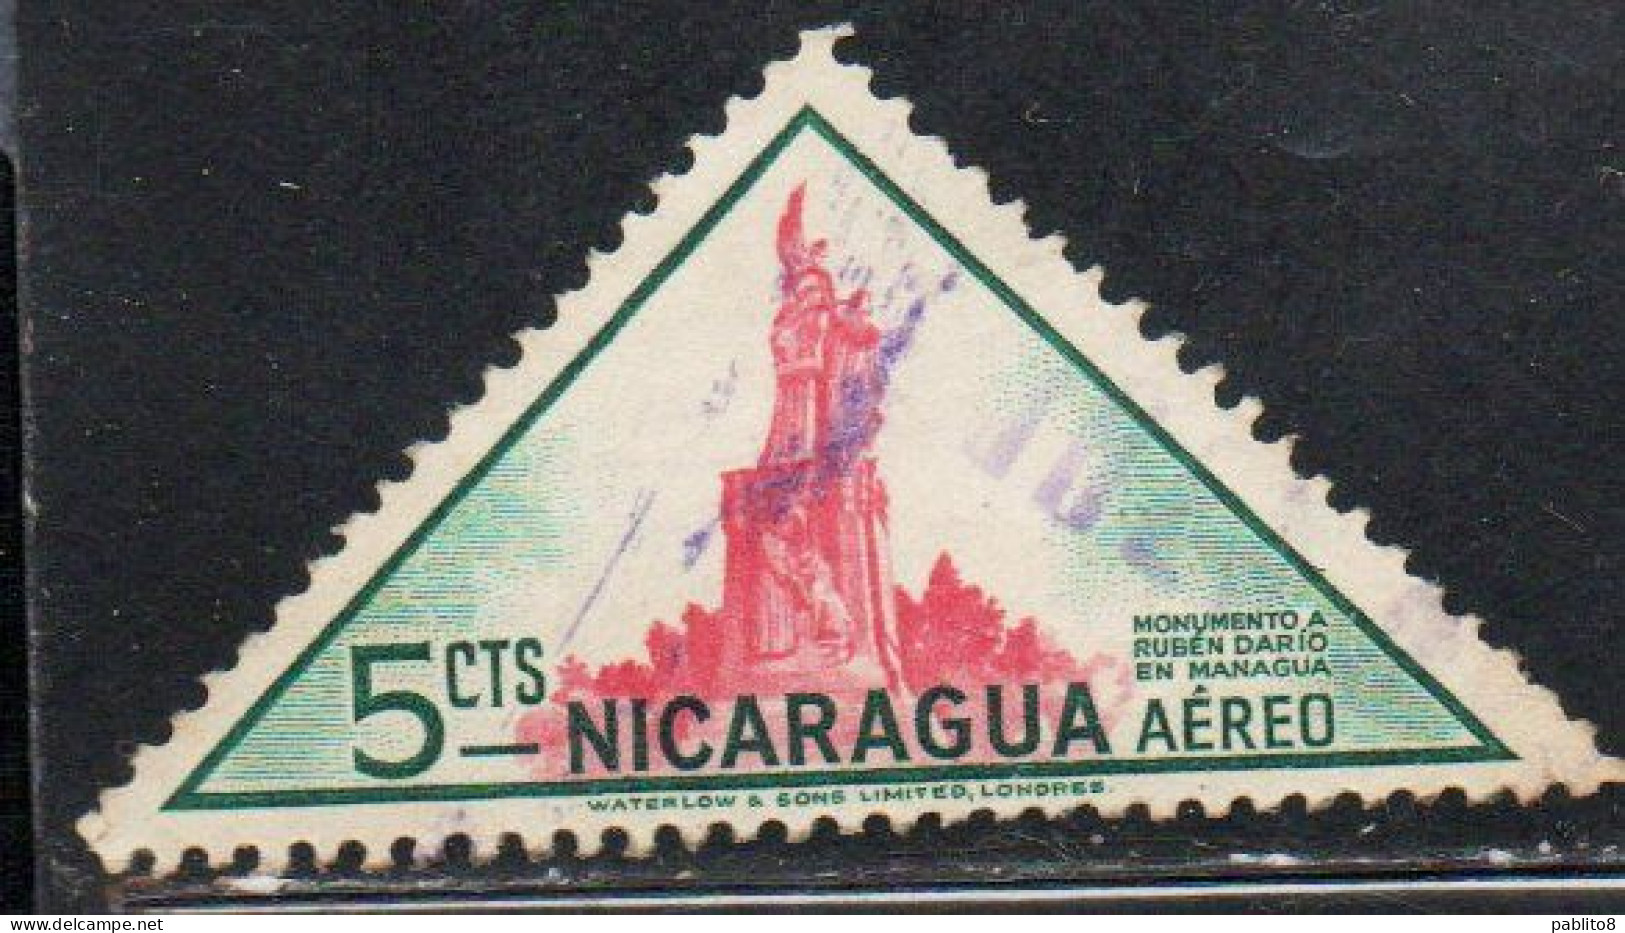 NICARAGUA 1947 AIR POST MAIL AIRMAIL RUBEN DARIO MONUMENT 5c USED USATO OBLITERE' - Nicaragua